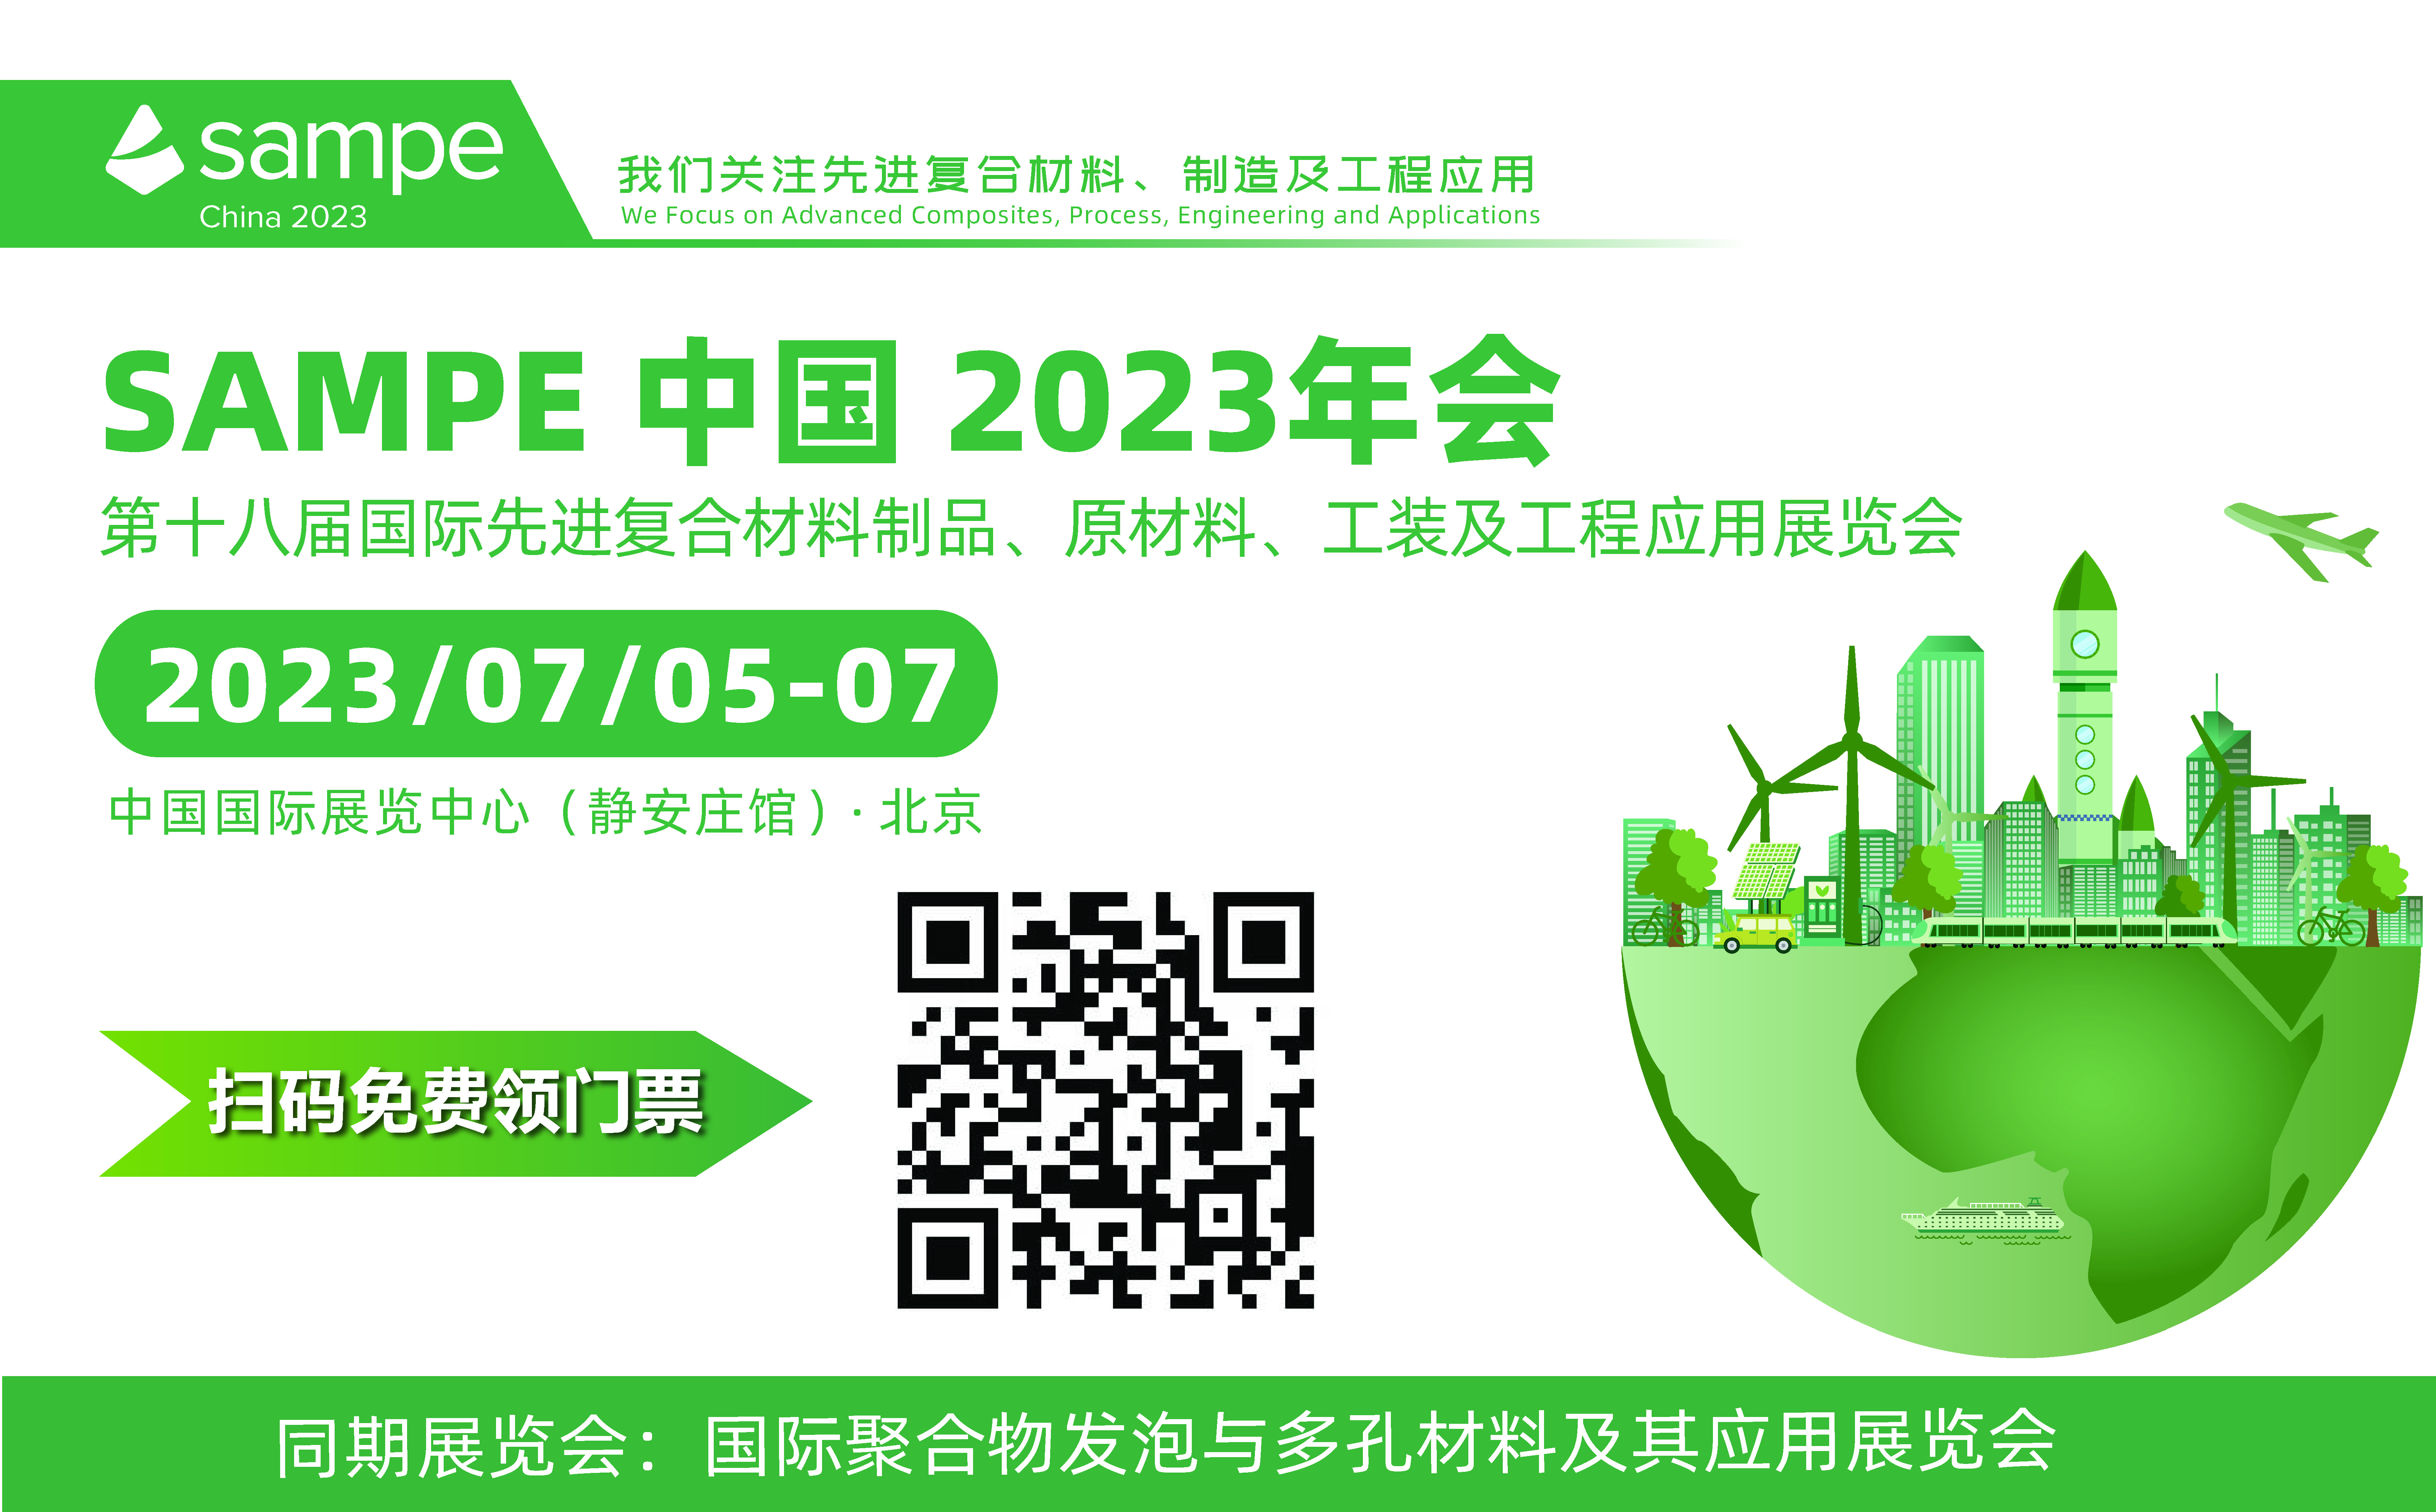 SAPME中國2023年會 第十八屆國際先進符合材料制品、原材料、工裝及工程應用展覽會